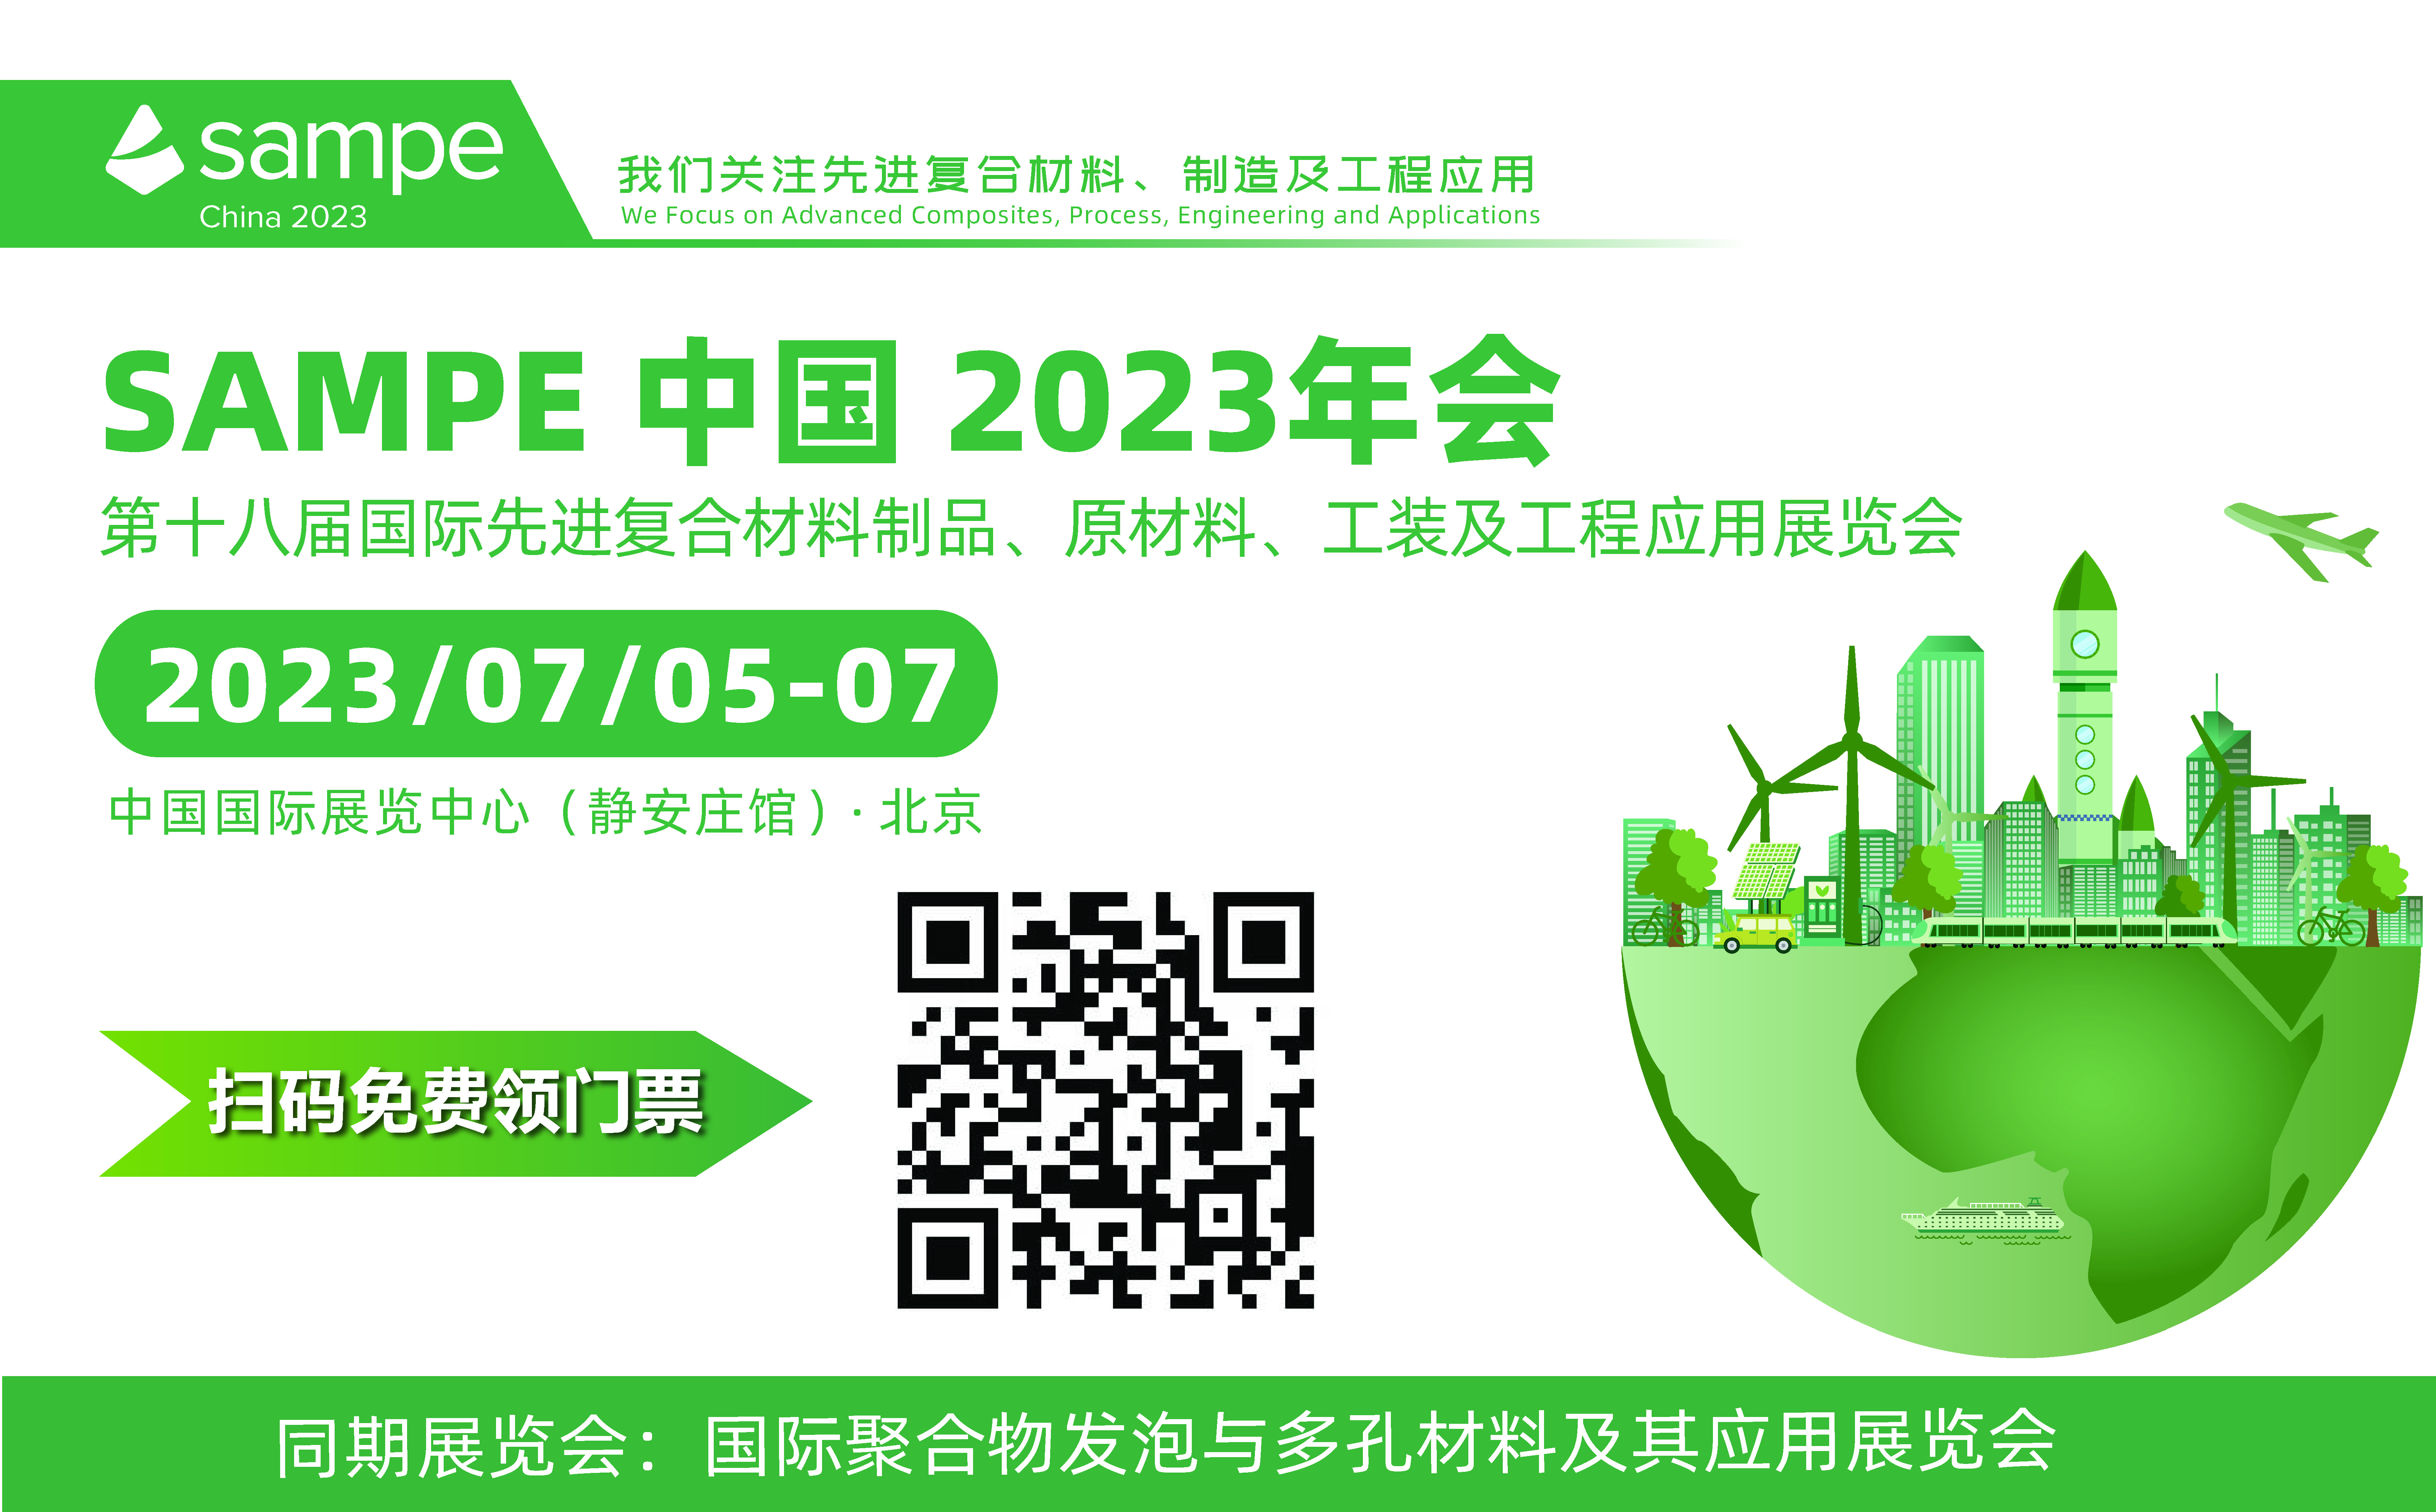 SAPME中國2023年會 第十八屆國際先進符合材料制品、原材料、工裝及工程應用展覽會